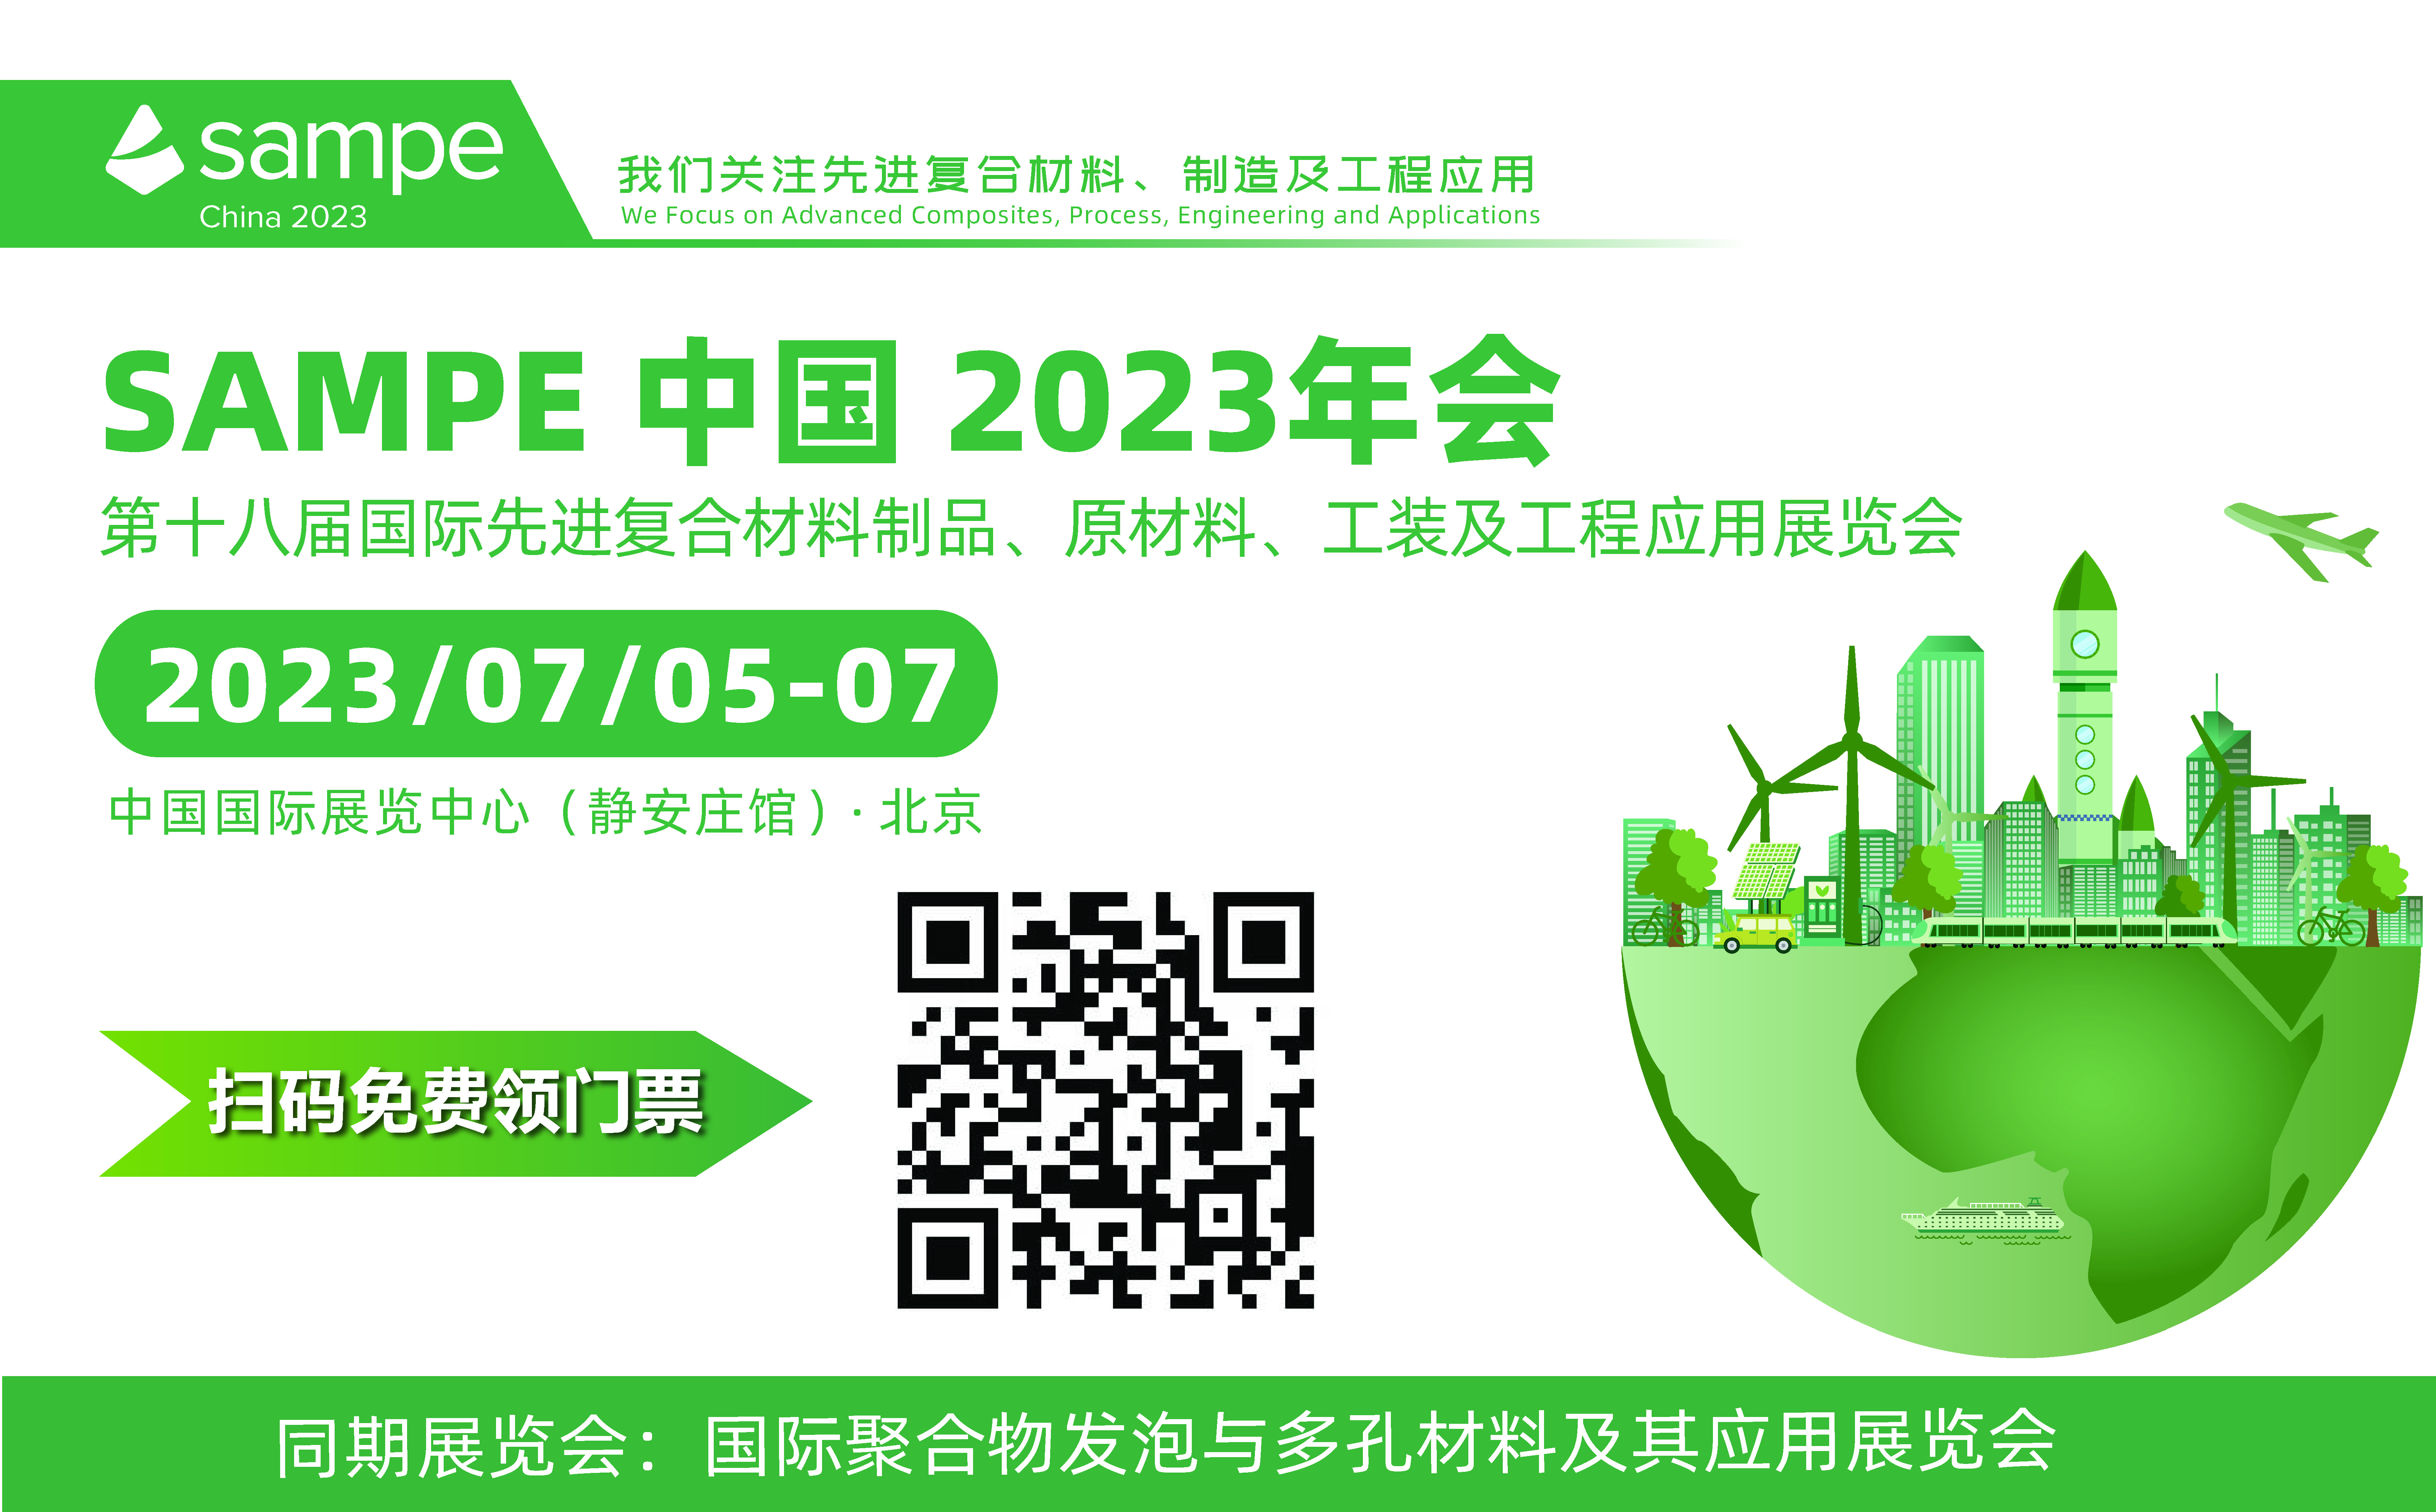 SAPME中國2023年會 第十八屆國際先進符合材料制品、原材料、工裝及工程應用展覽會